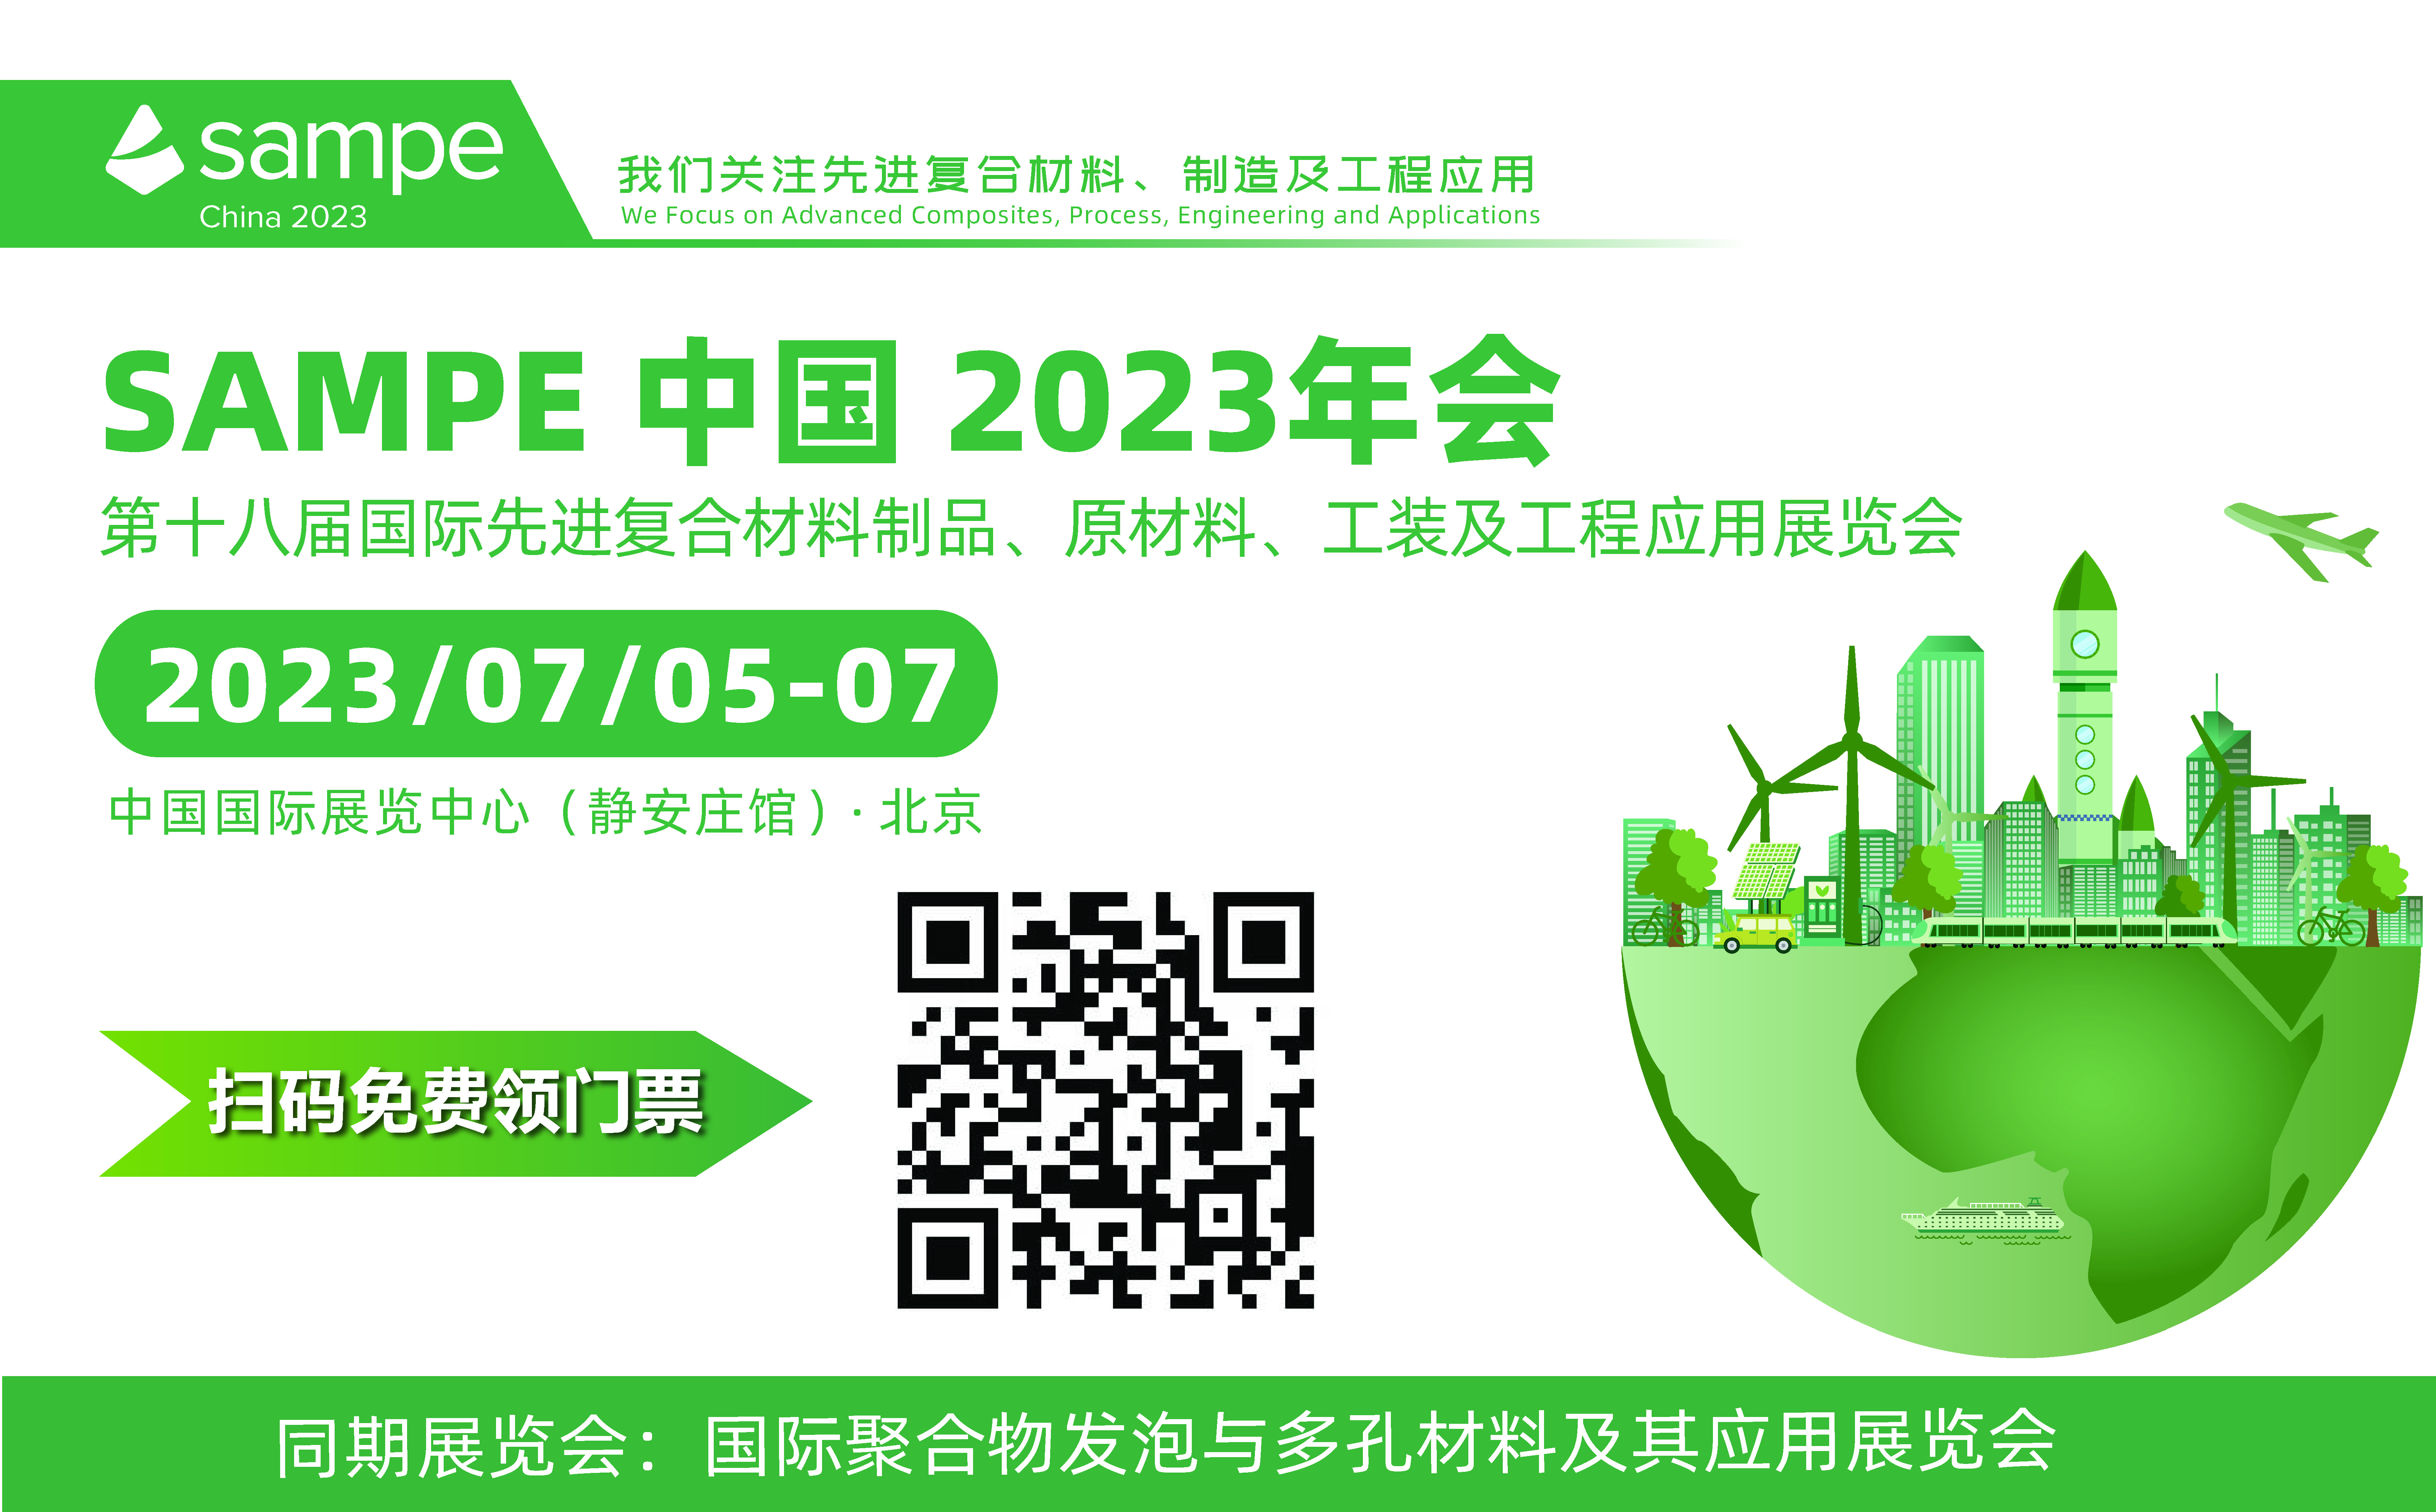 SAPME中國2023年會 第十八屆國際先進符合材料制品、原材料、工裝及工程應用展覽會